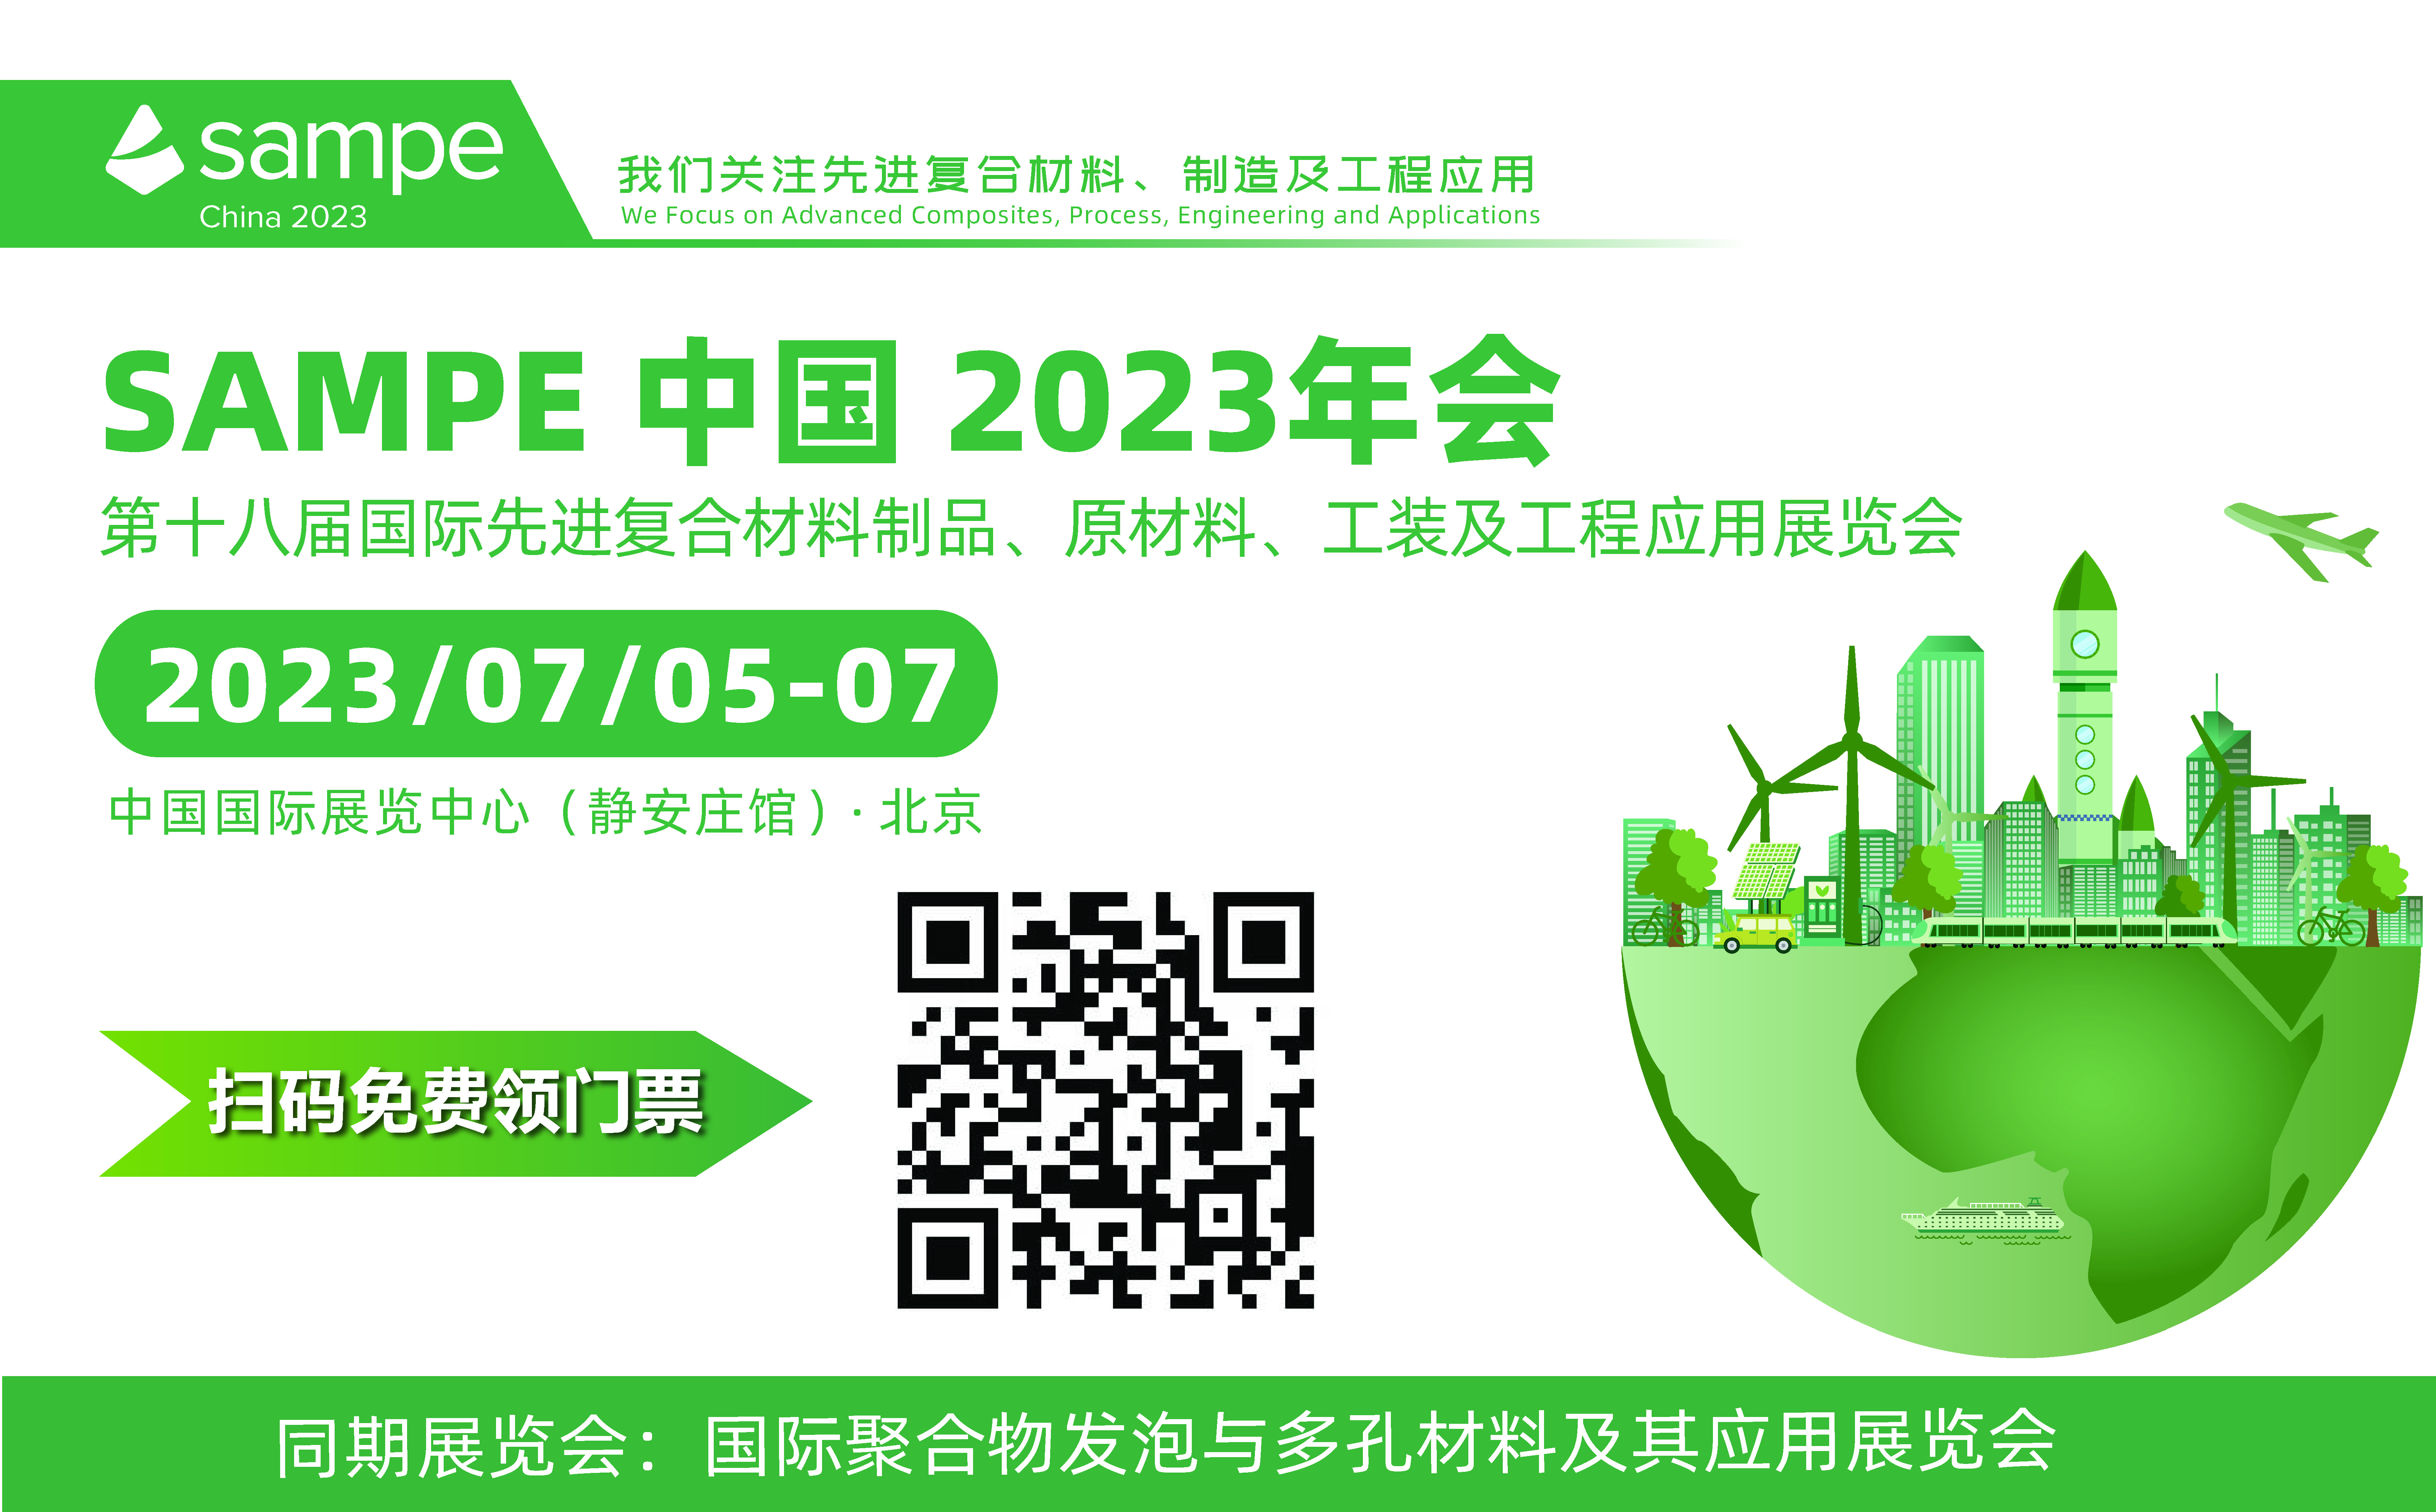 SAPME中國2023年會 第十八屆國際先進符合材料制品、原材料、工裝及工程應用展覽會